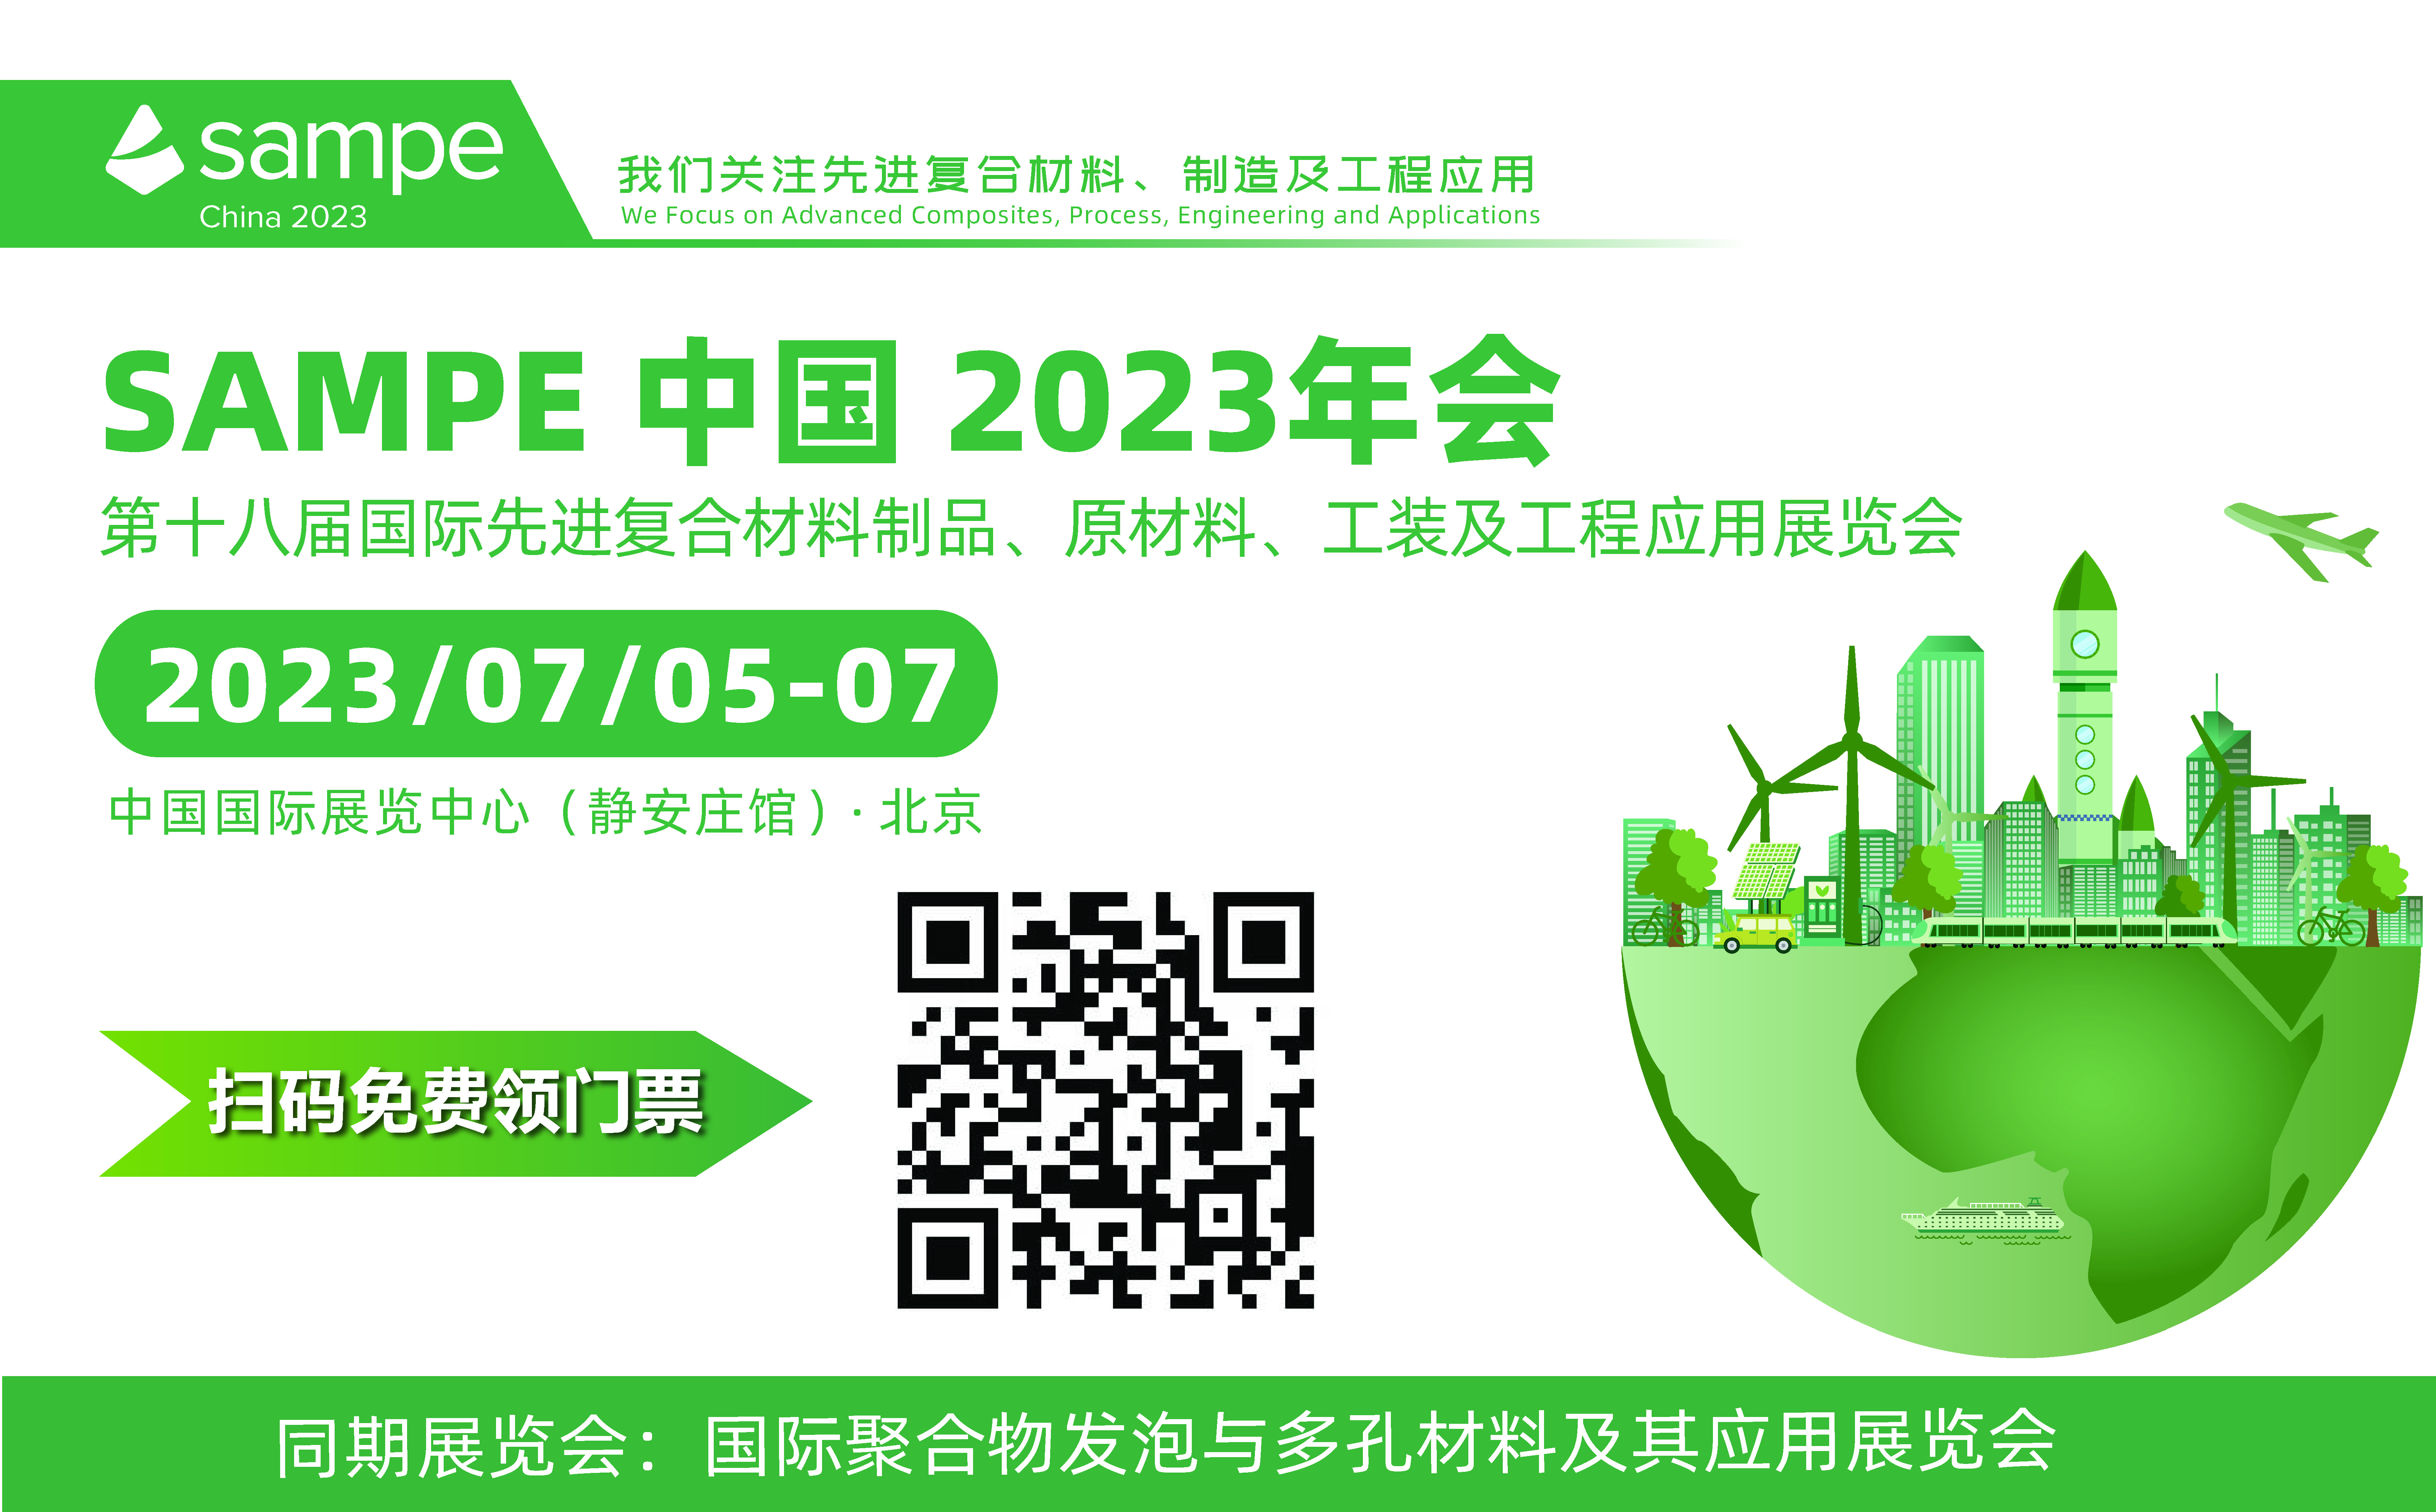 SAPME中國2023年會 第十八屆國際先進符合材料制品、原材料、工裝及工程應用展覽會